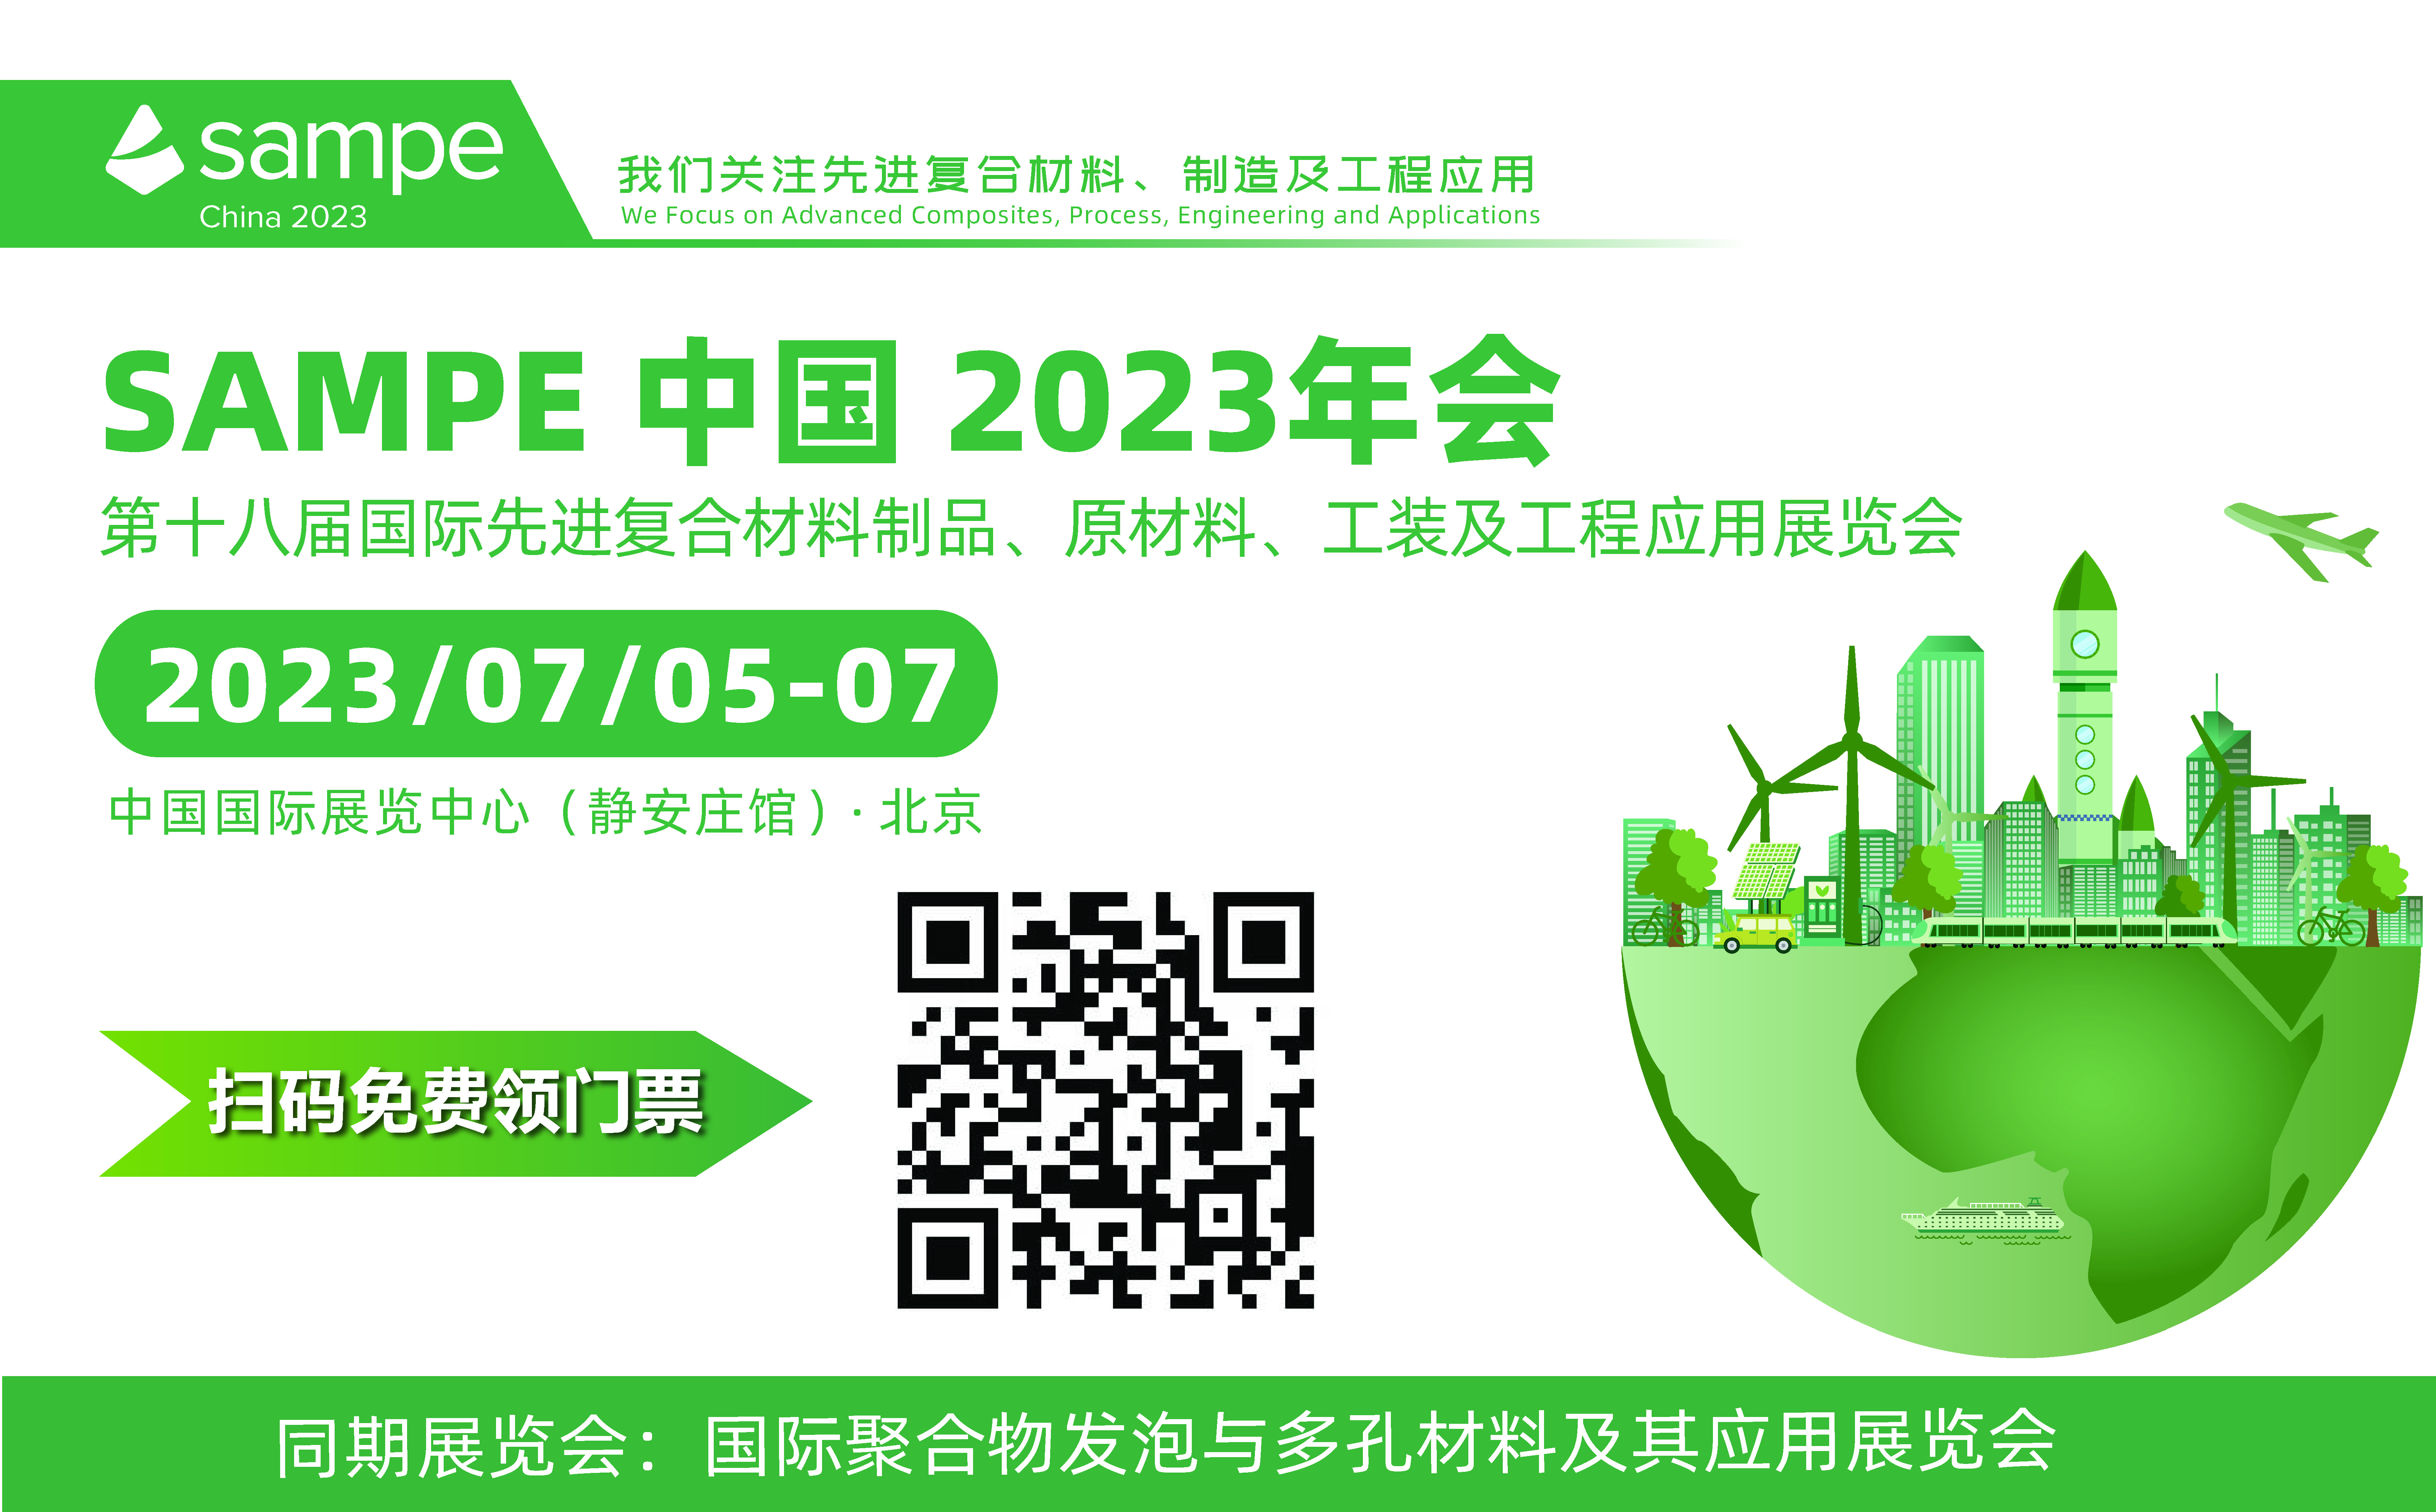 SAPME中國2023年會 第十八屆國際先進符合材料制品、原材料、工裝及工程應用展覽會